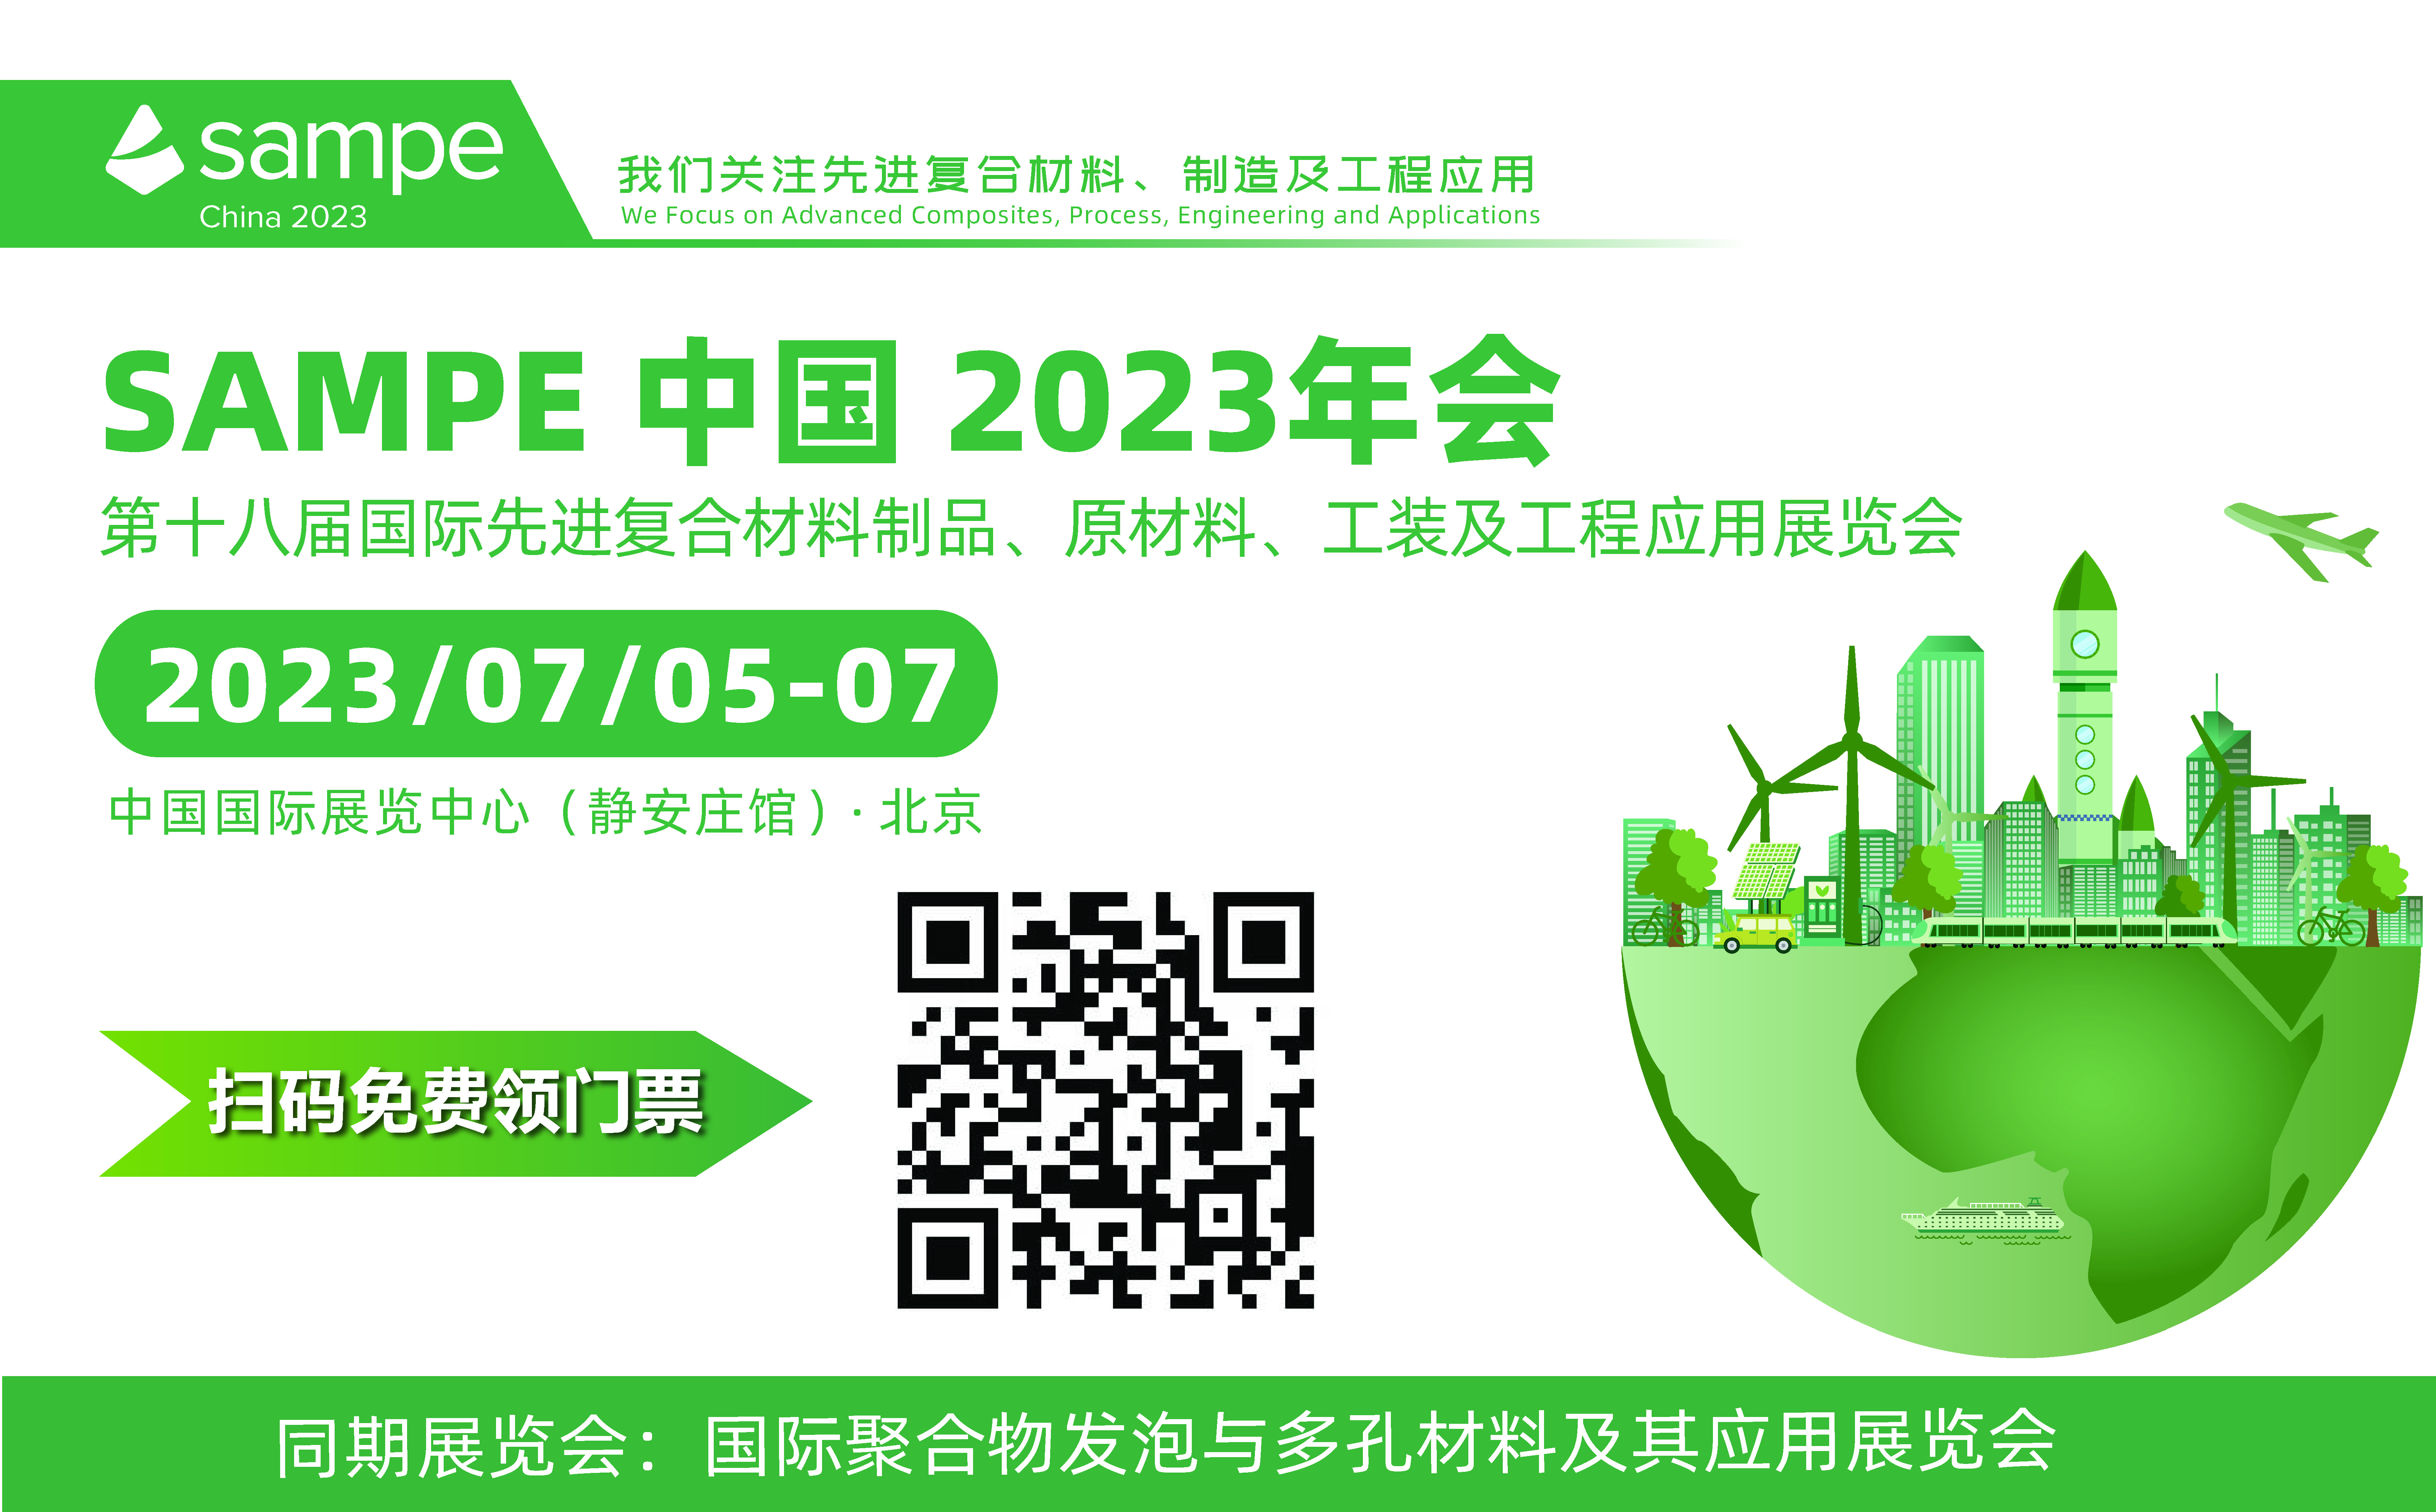 SAPME中國2023年會 第十八屆國際先進符合材料制品、原材料、工裝及工程應用展覽會